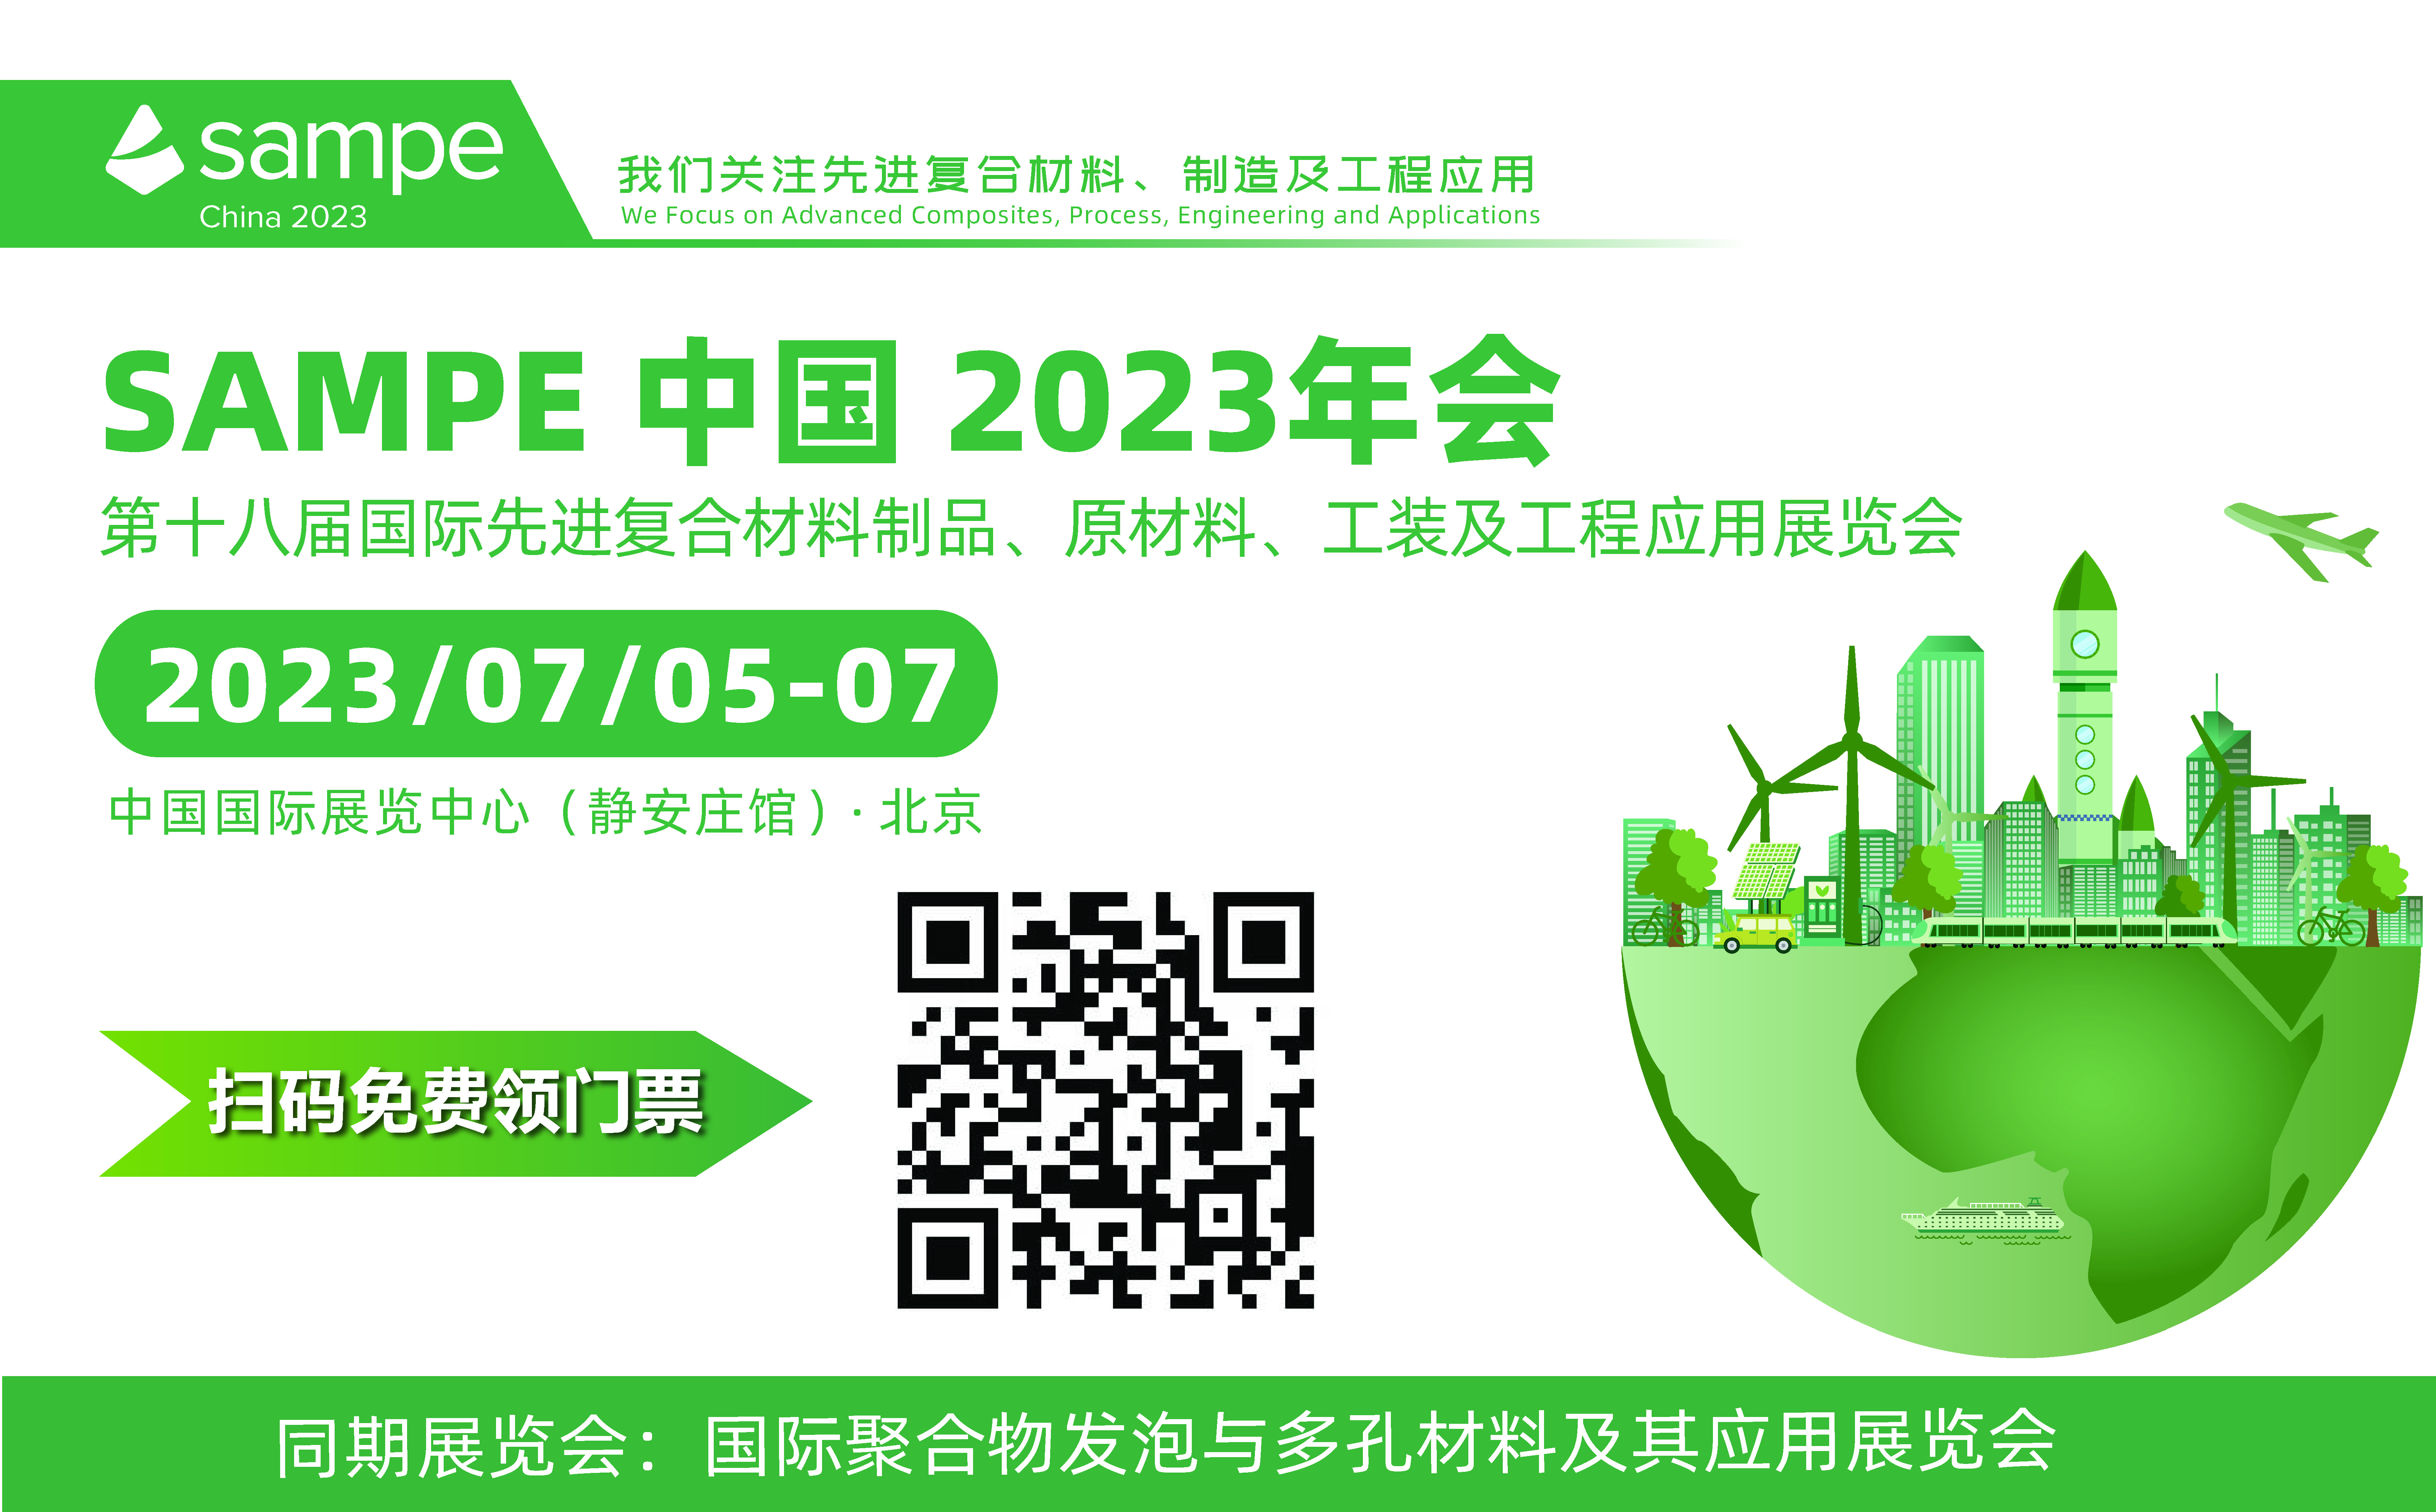 SAPME中國2023年會 第十八屆國際先進符合材料制品、原材料、工裝及工程應用展覽會